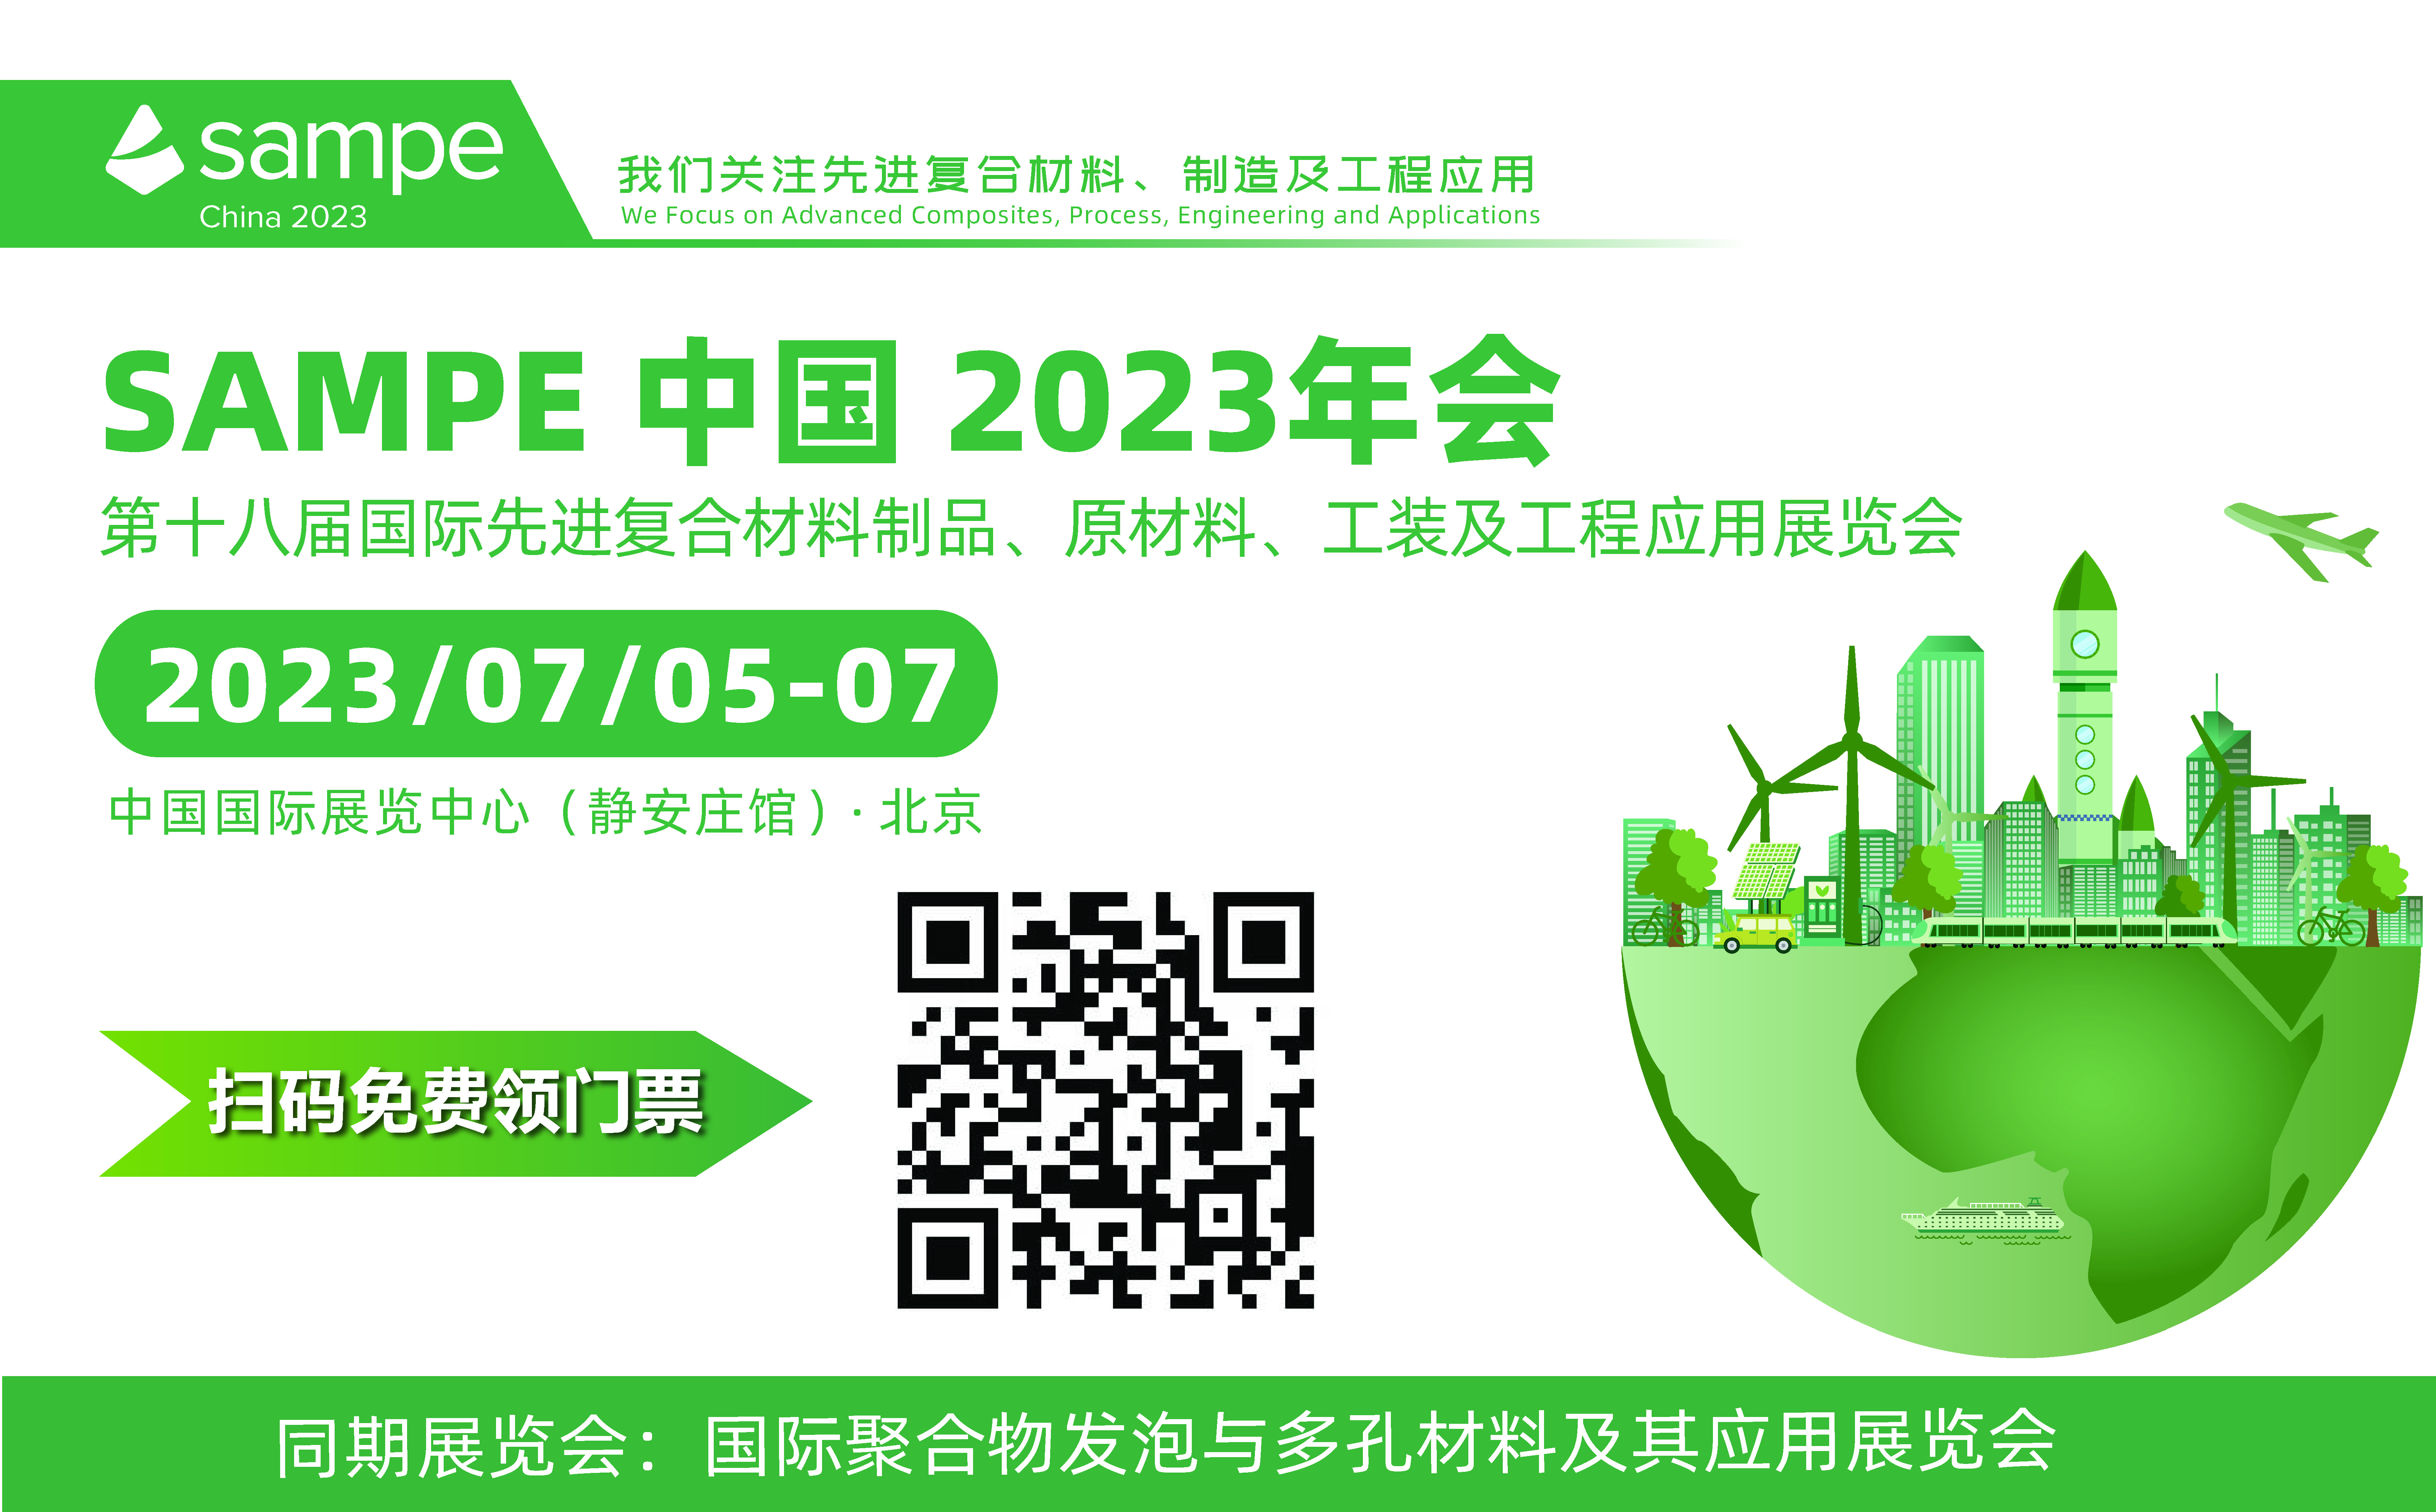 SAPME中國2023年會 第十八屆國際先進符合材料制品、原材料、工裝及工程應用展覽會